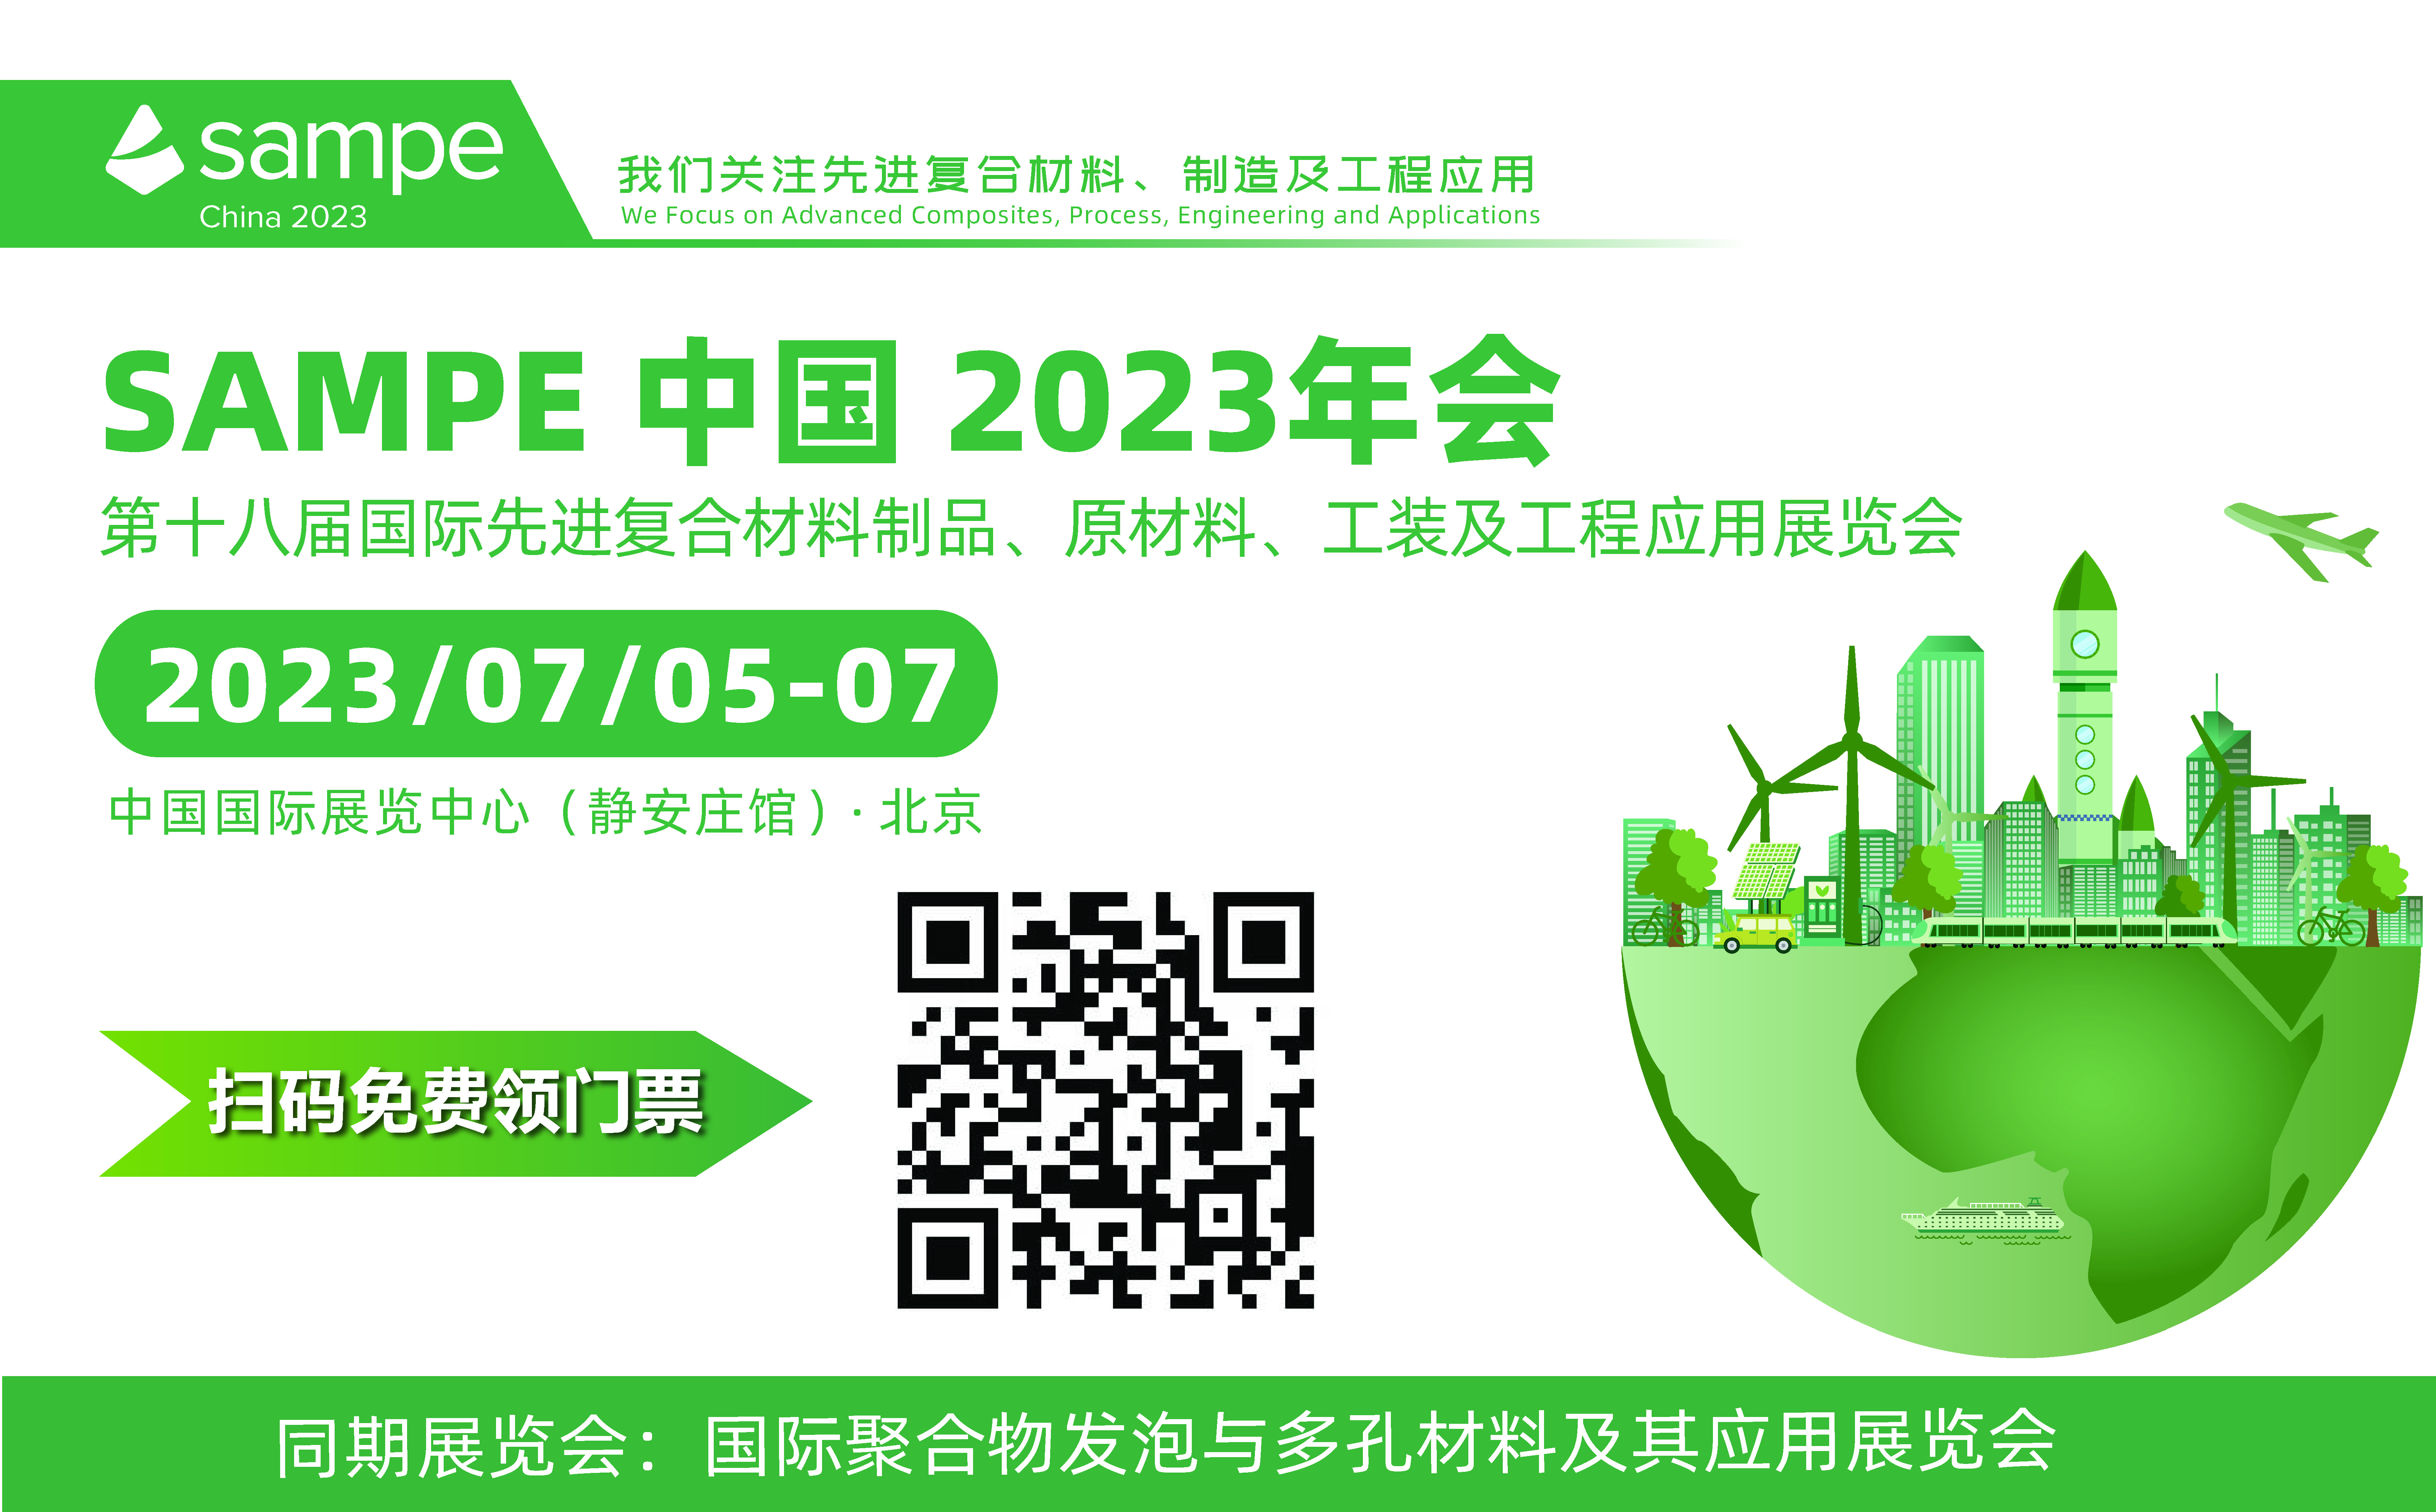 SAPME中國2023年會 第十八屆國際先進符合材料制品、原材料、工裝及工程應用展覽會